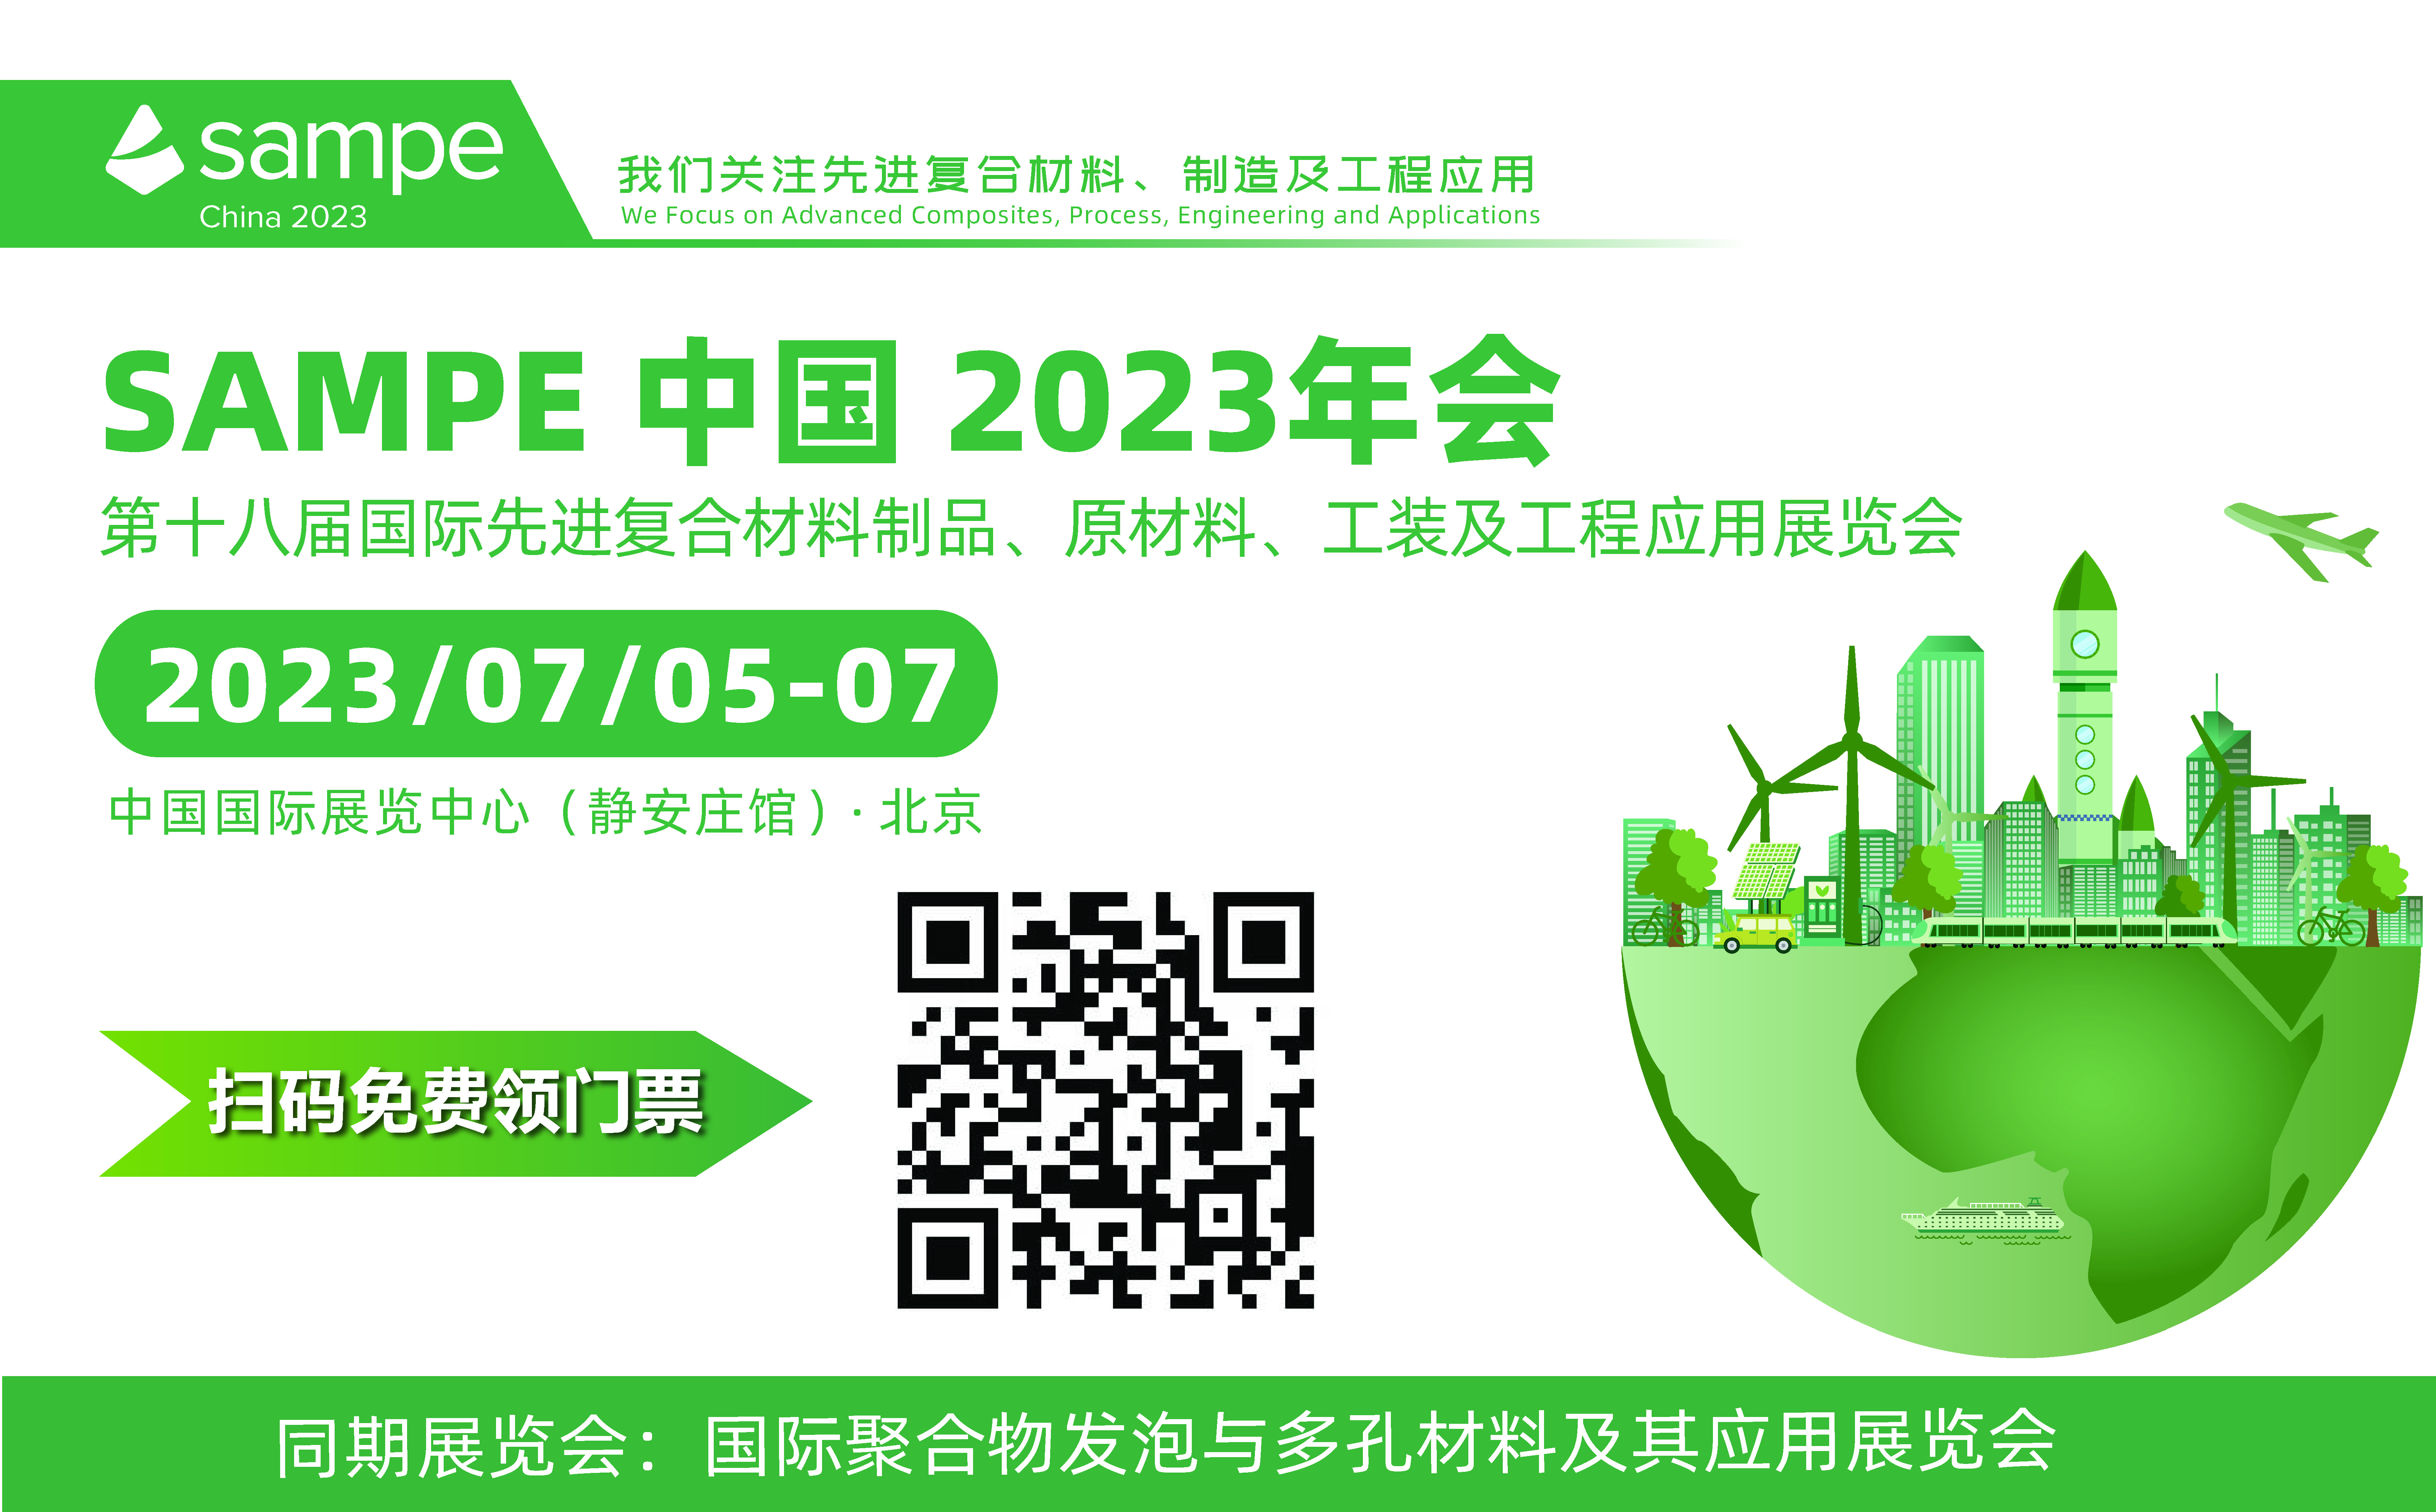 SAPME中國2023年會 第十八屆國際先進符合材料制品、原材料、工裝及工程應用展覽會